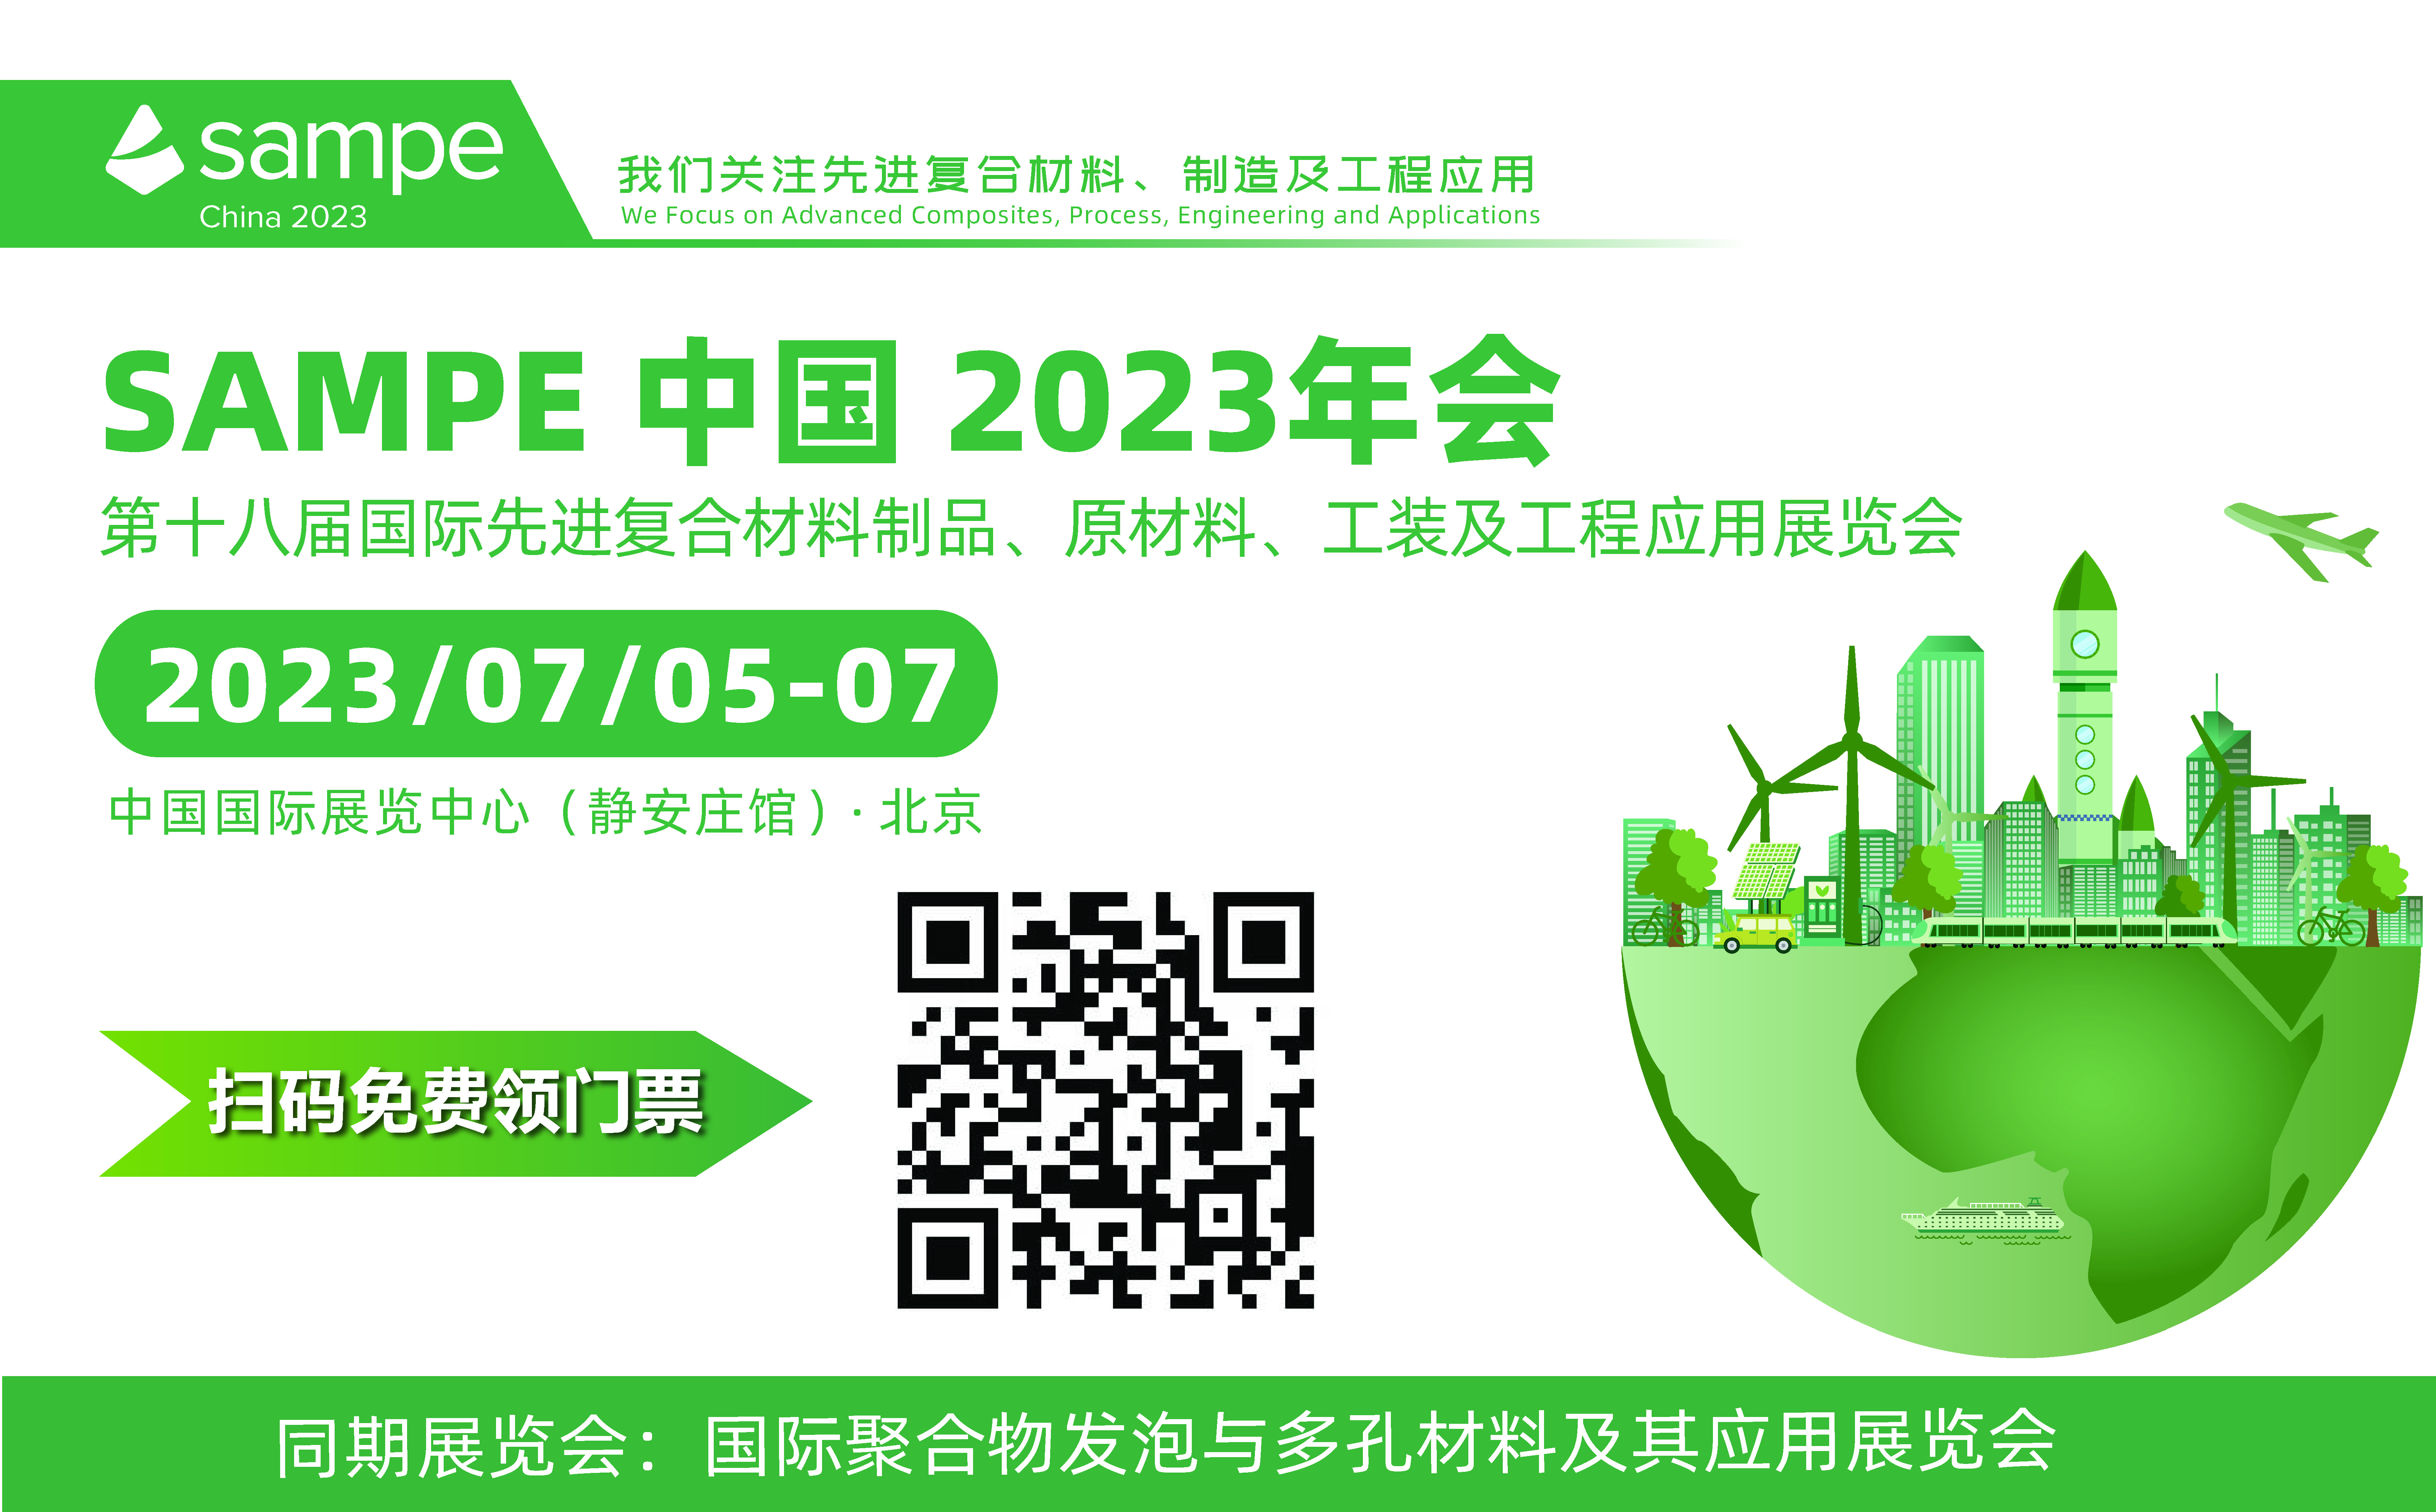 SAPME中國2023年會 第十八屆國際先進符合材料制品、原材料、工裝及工程應用展覽會